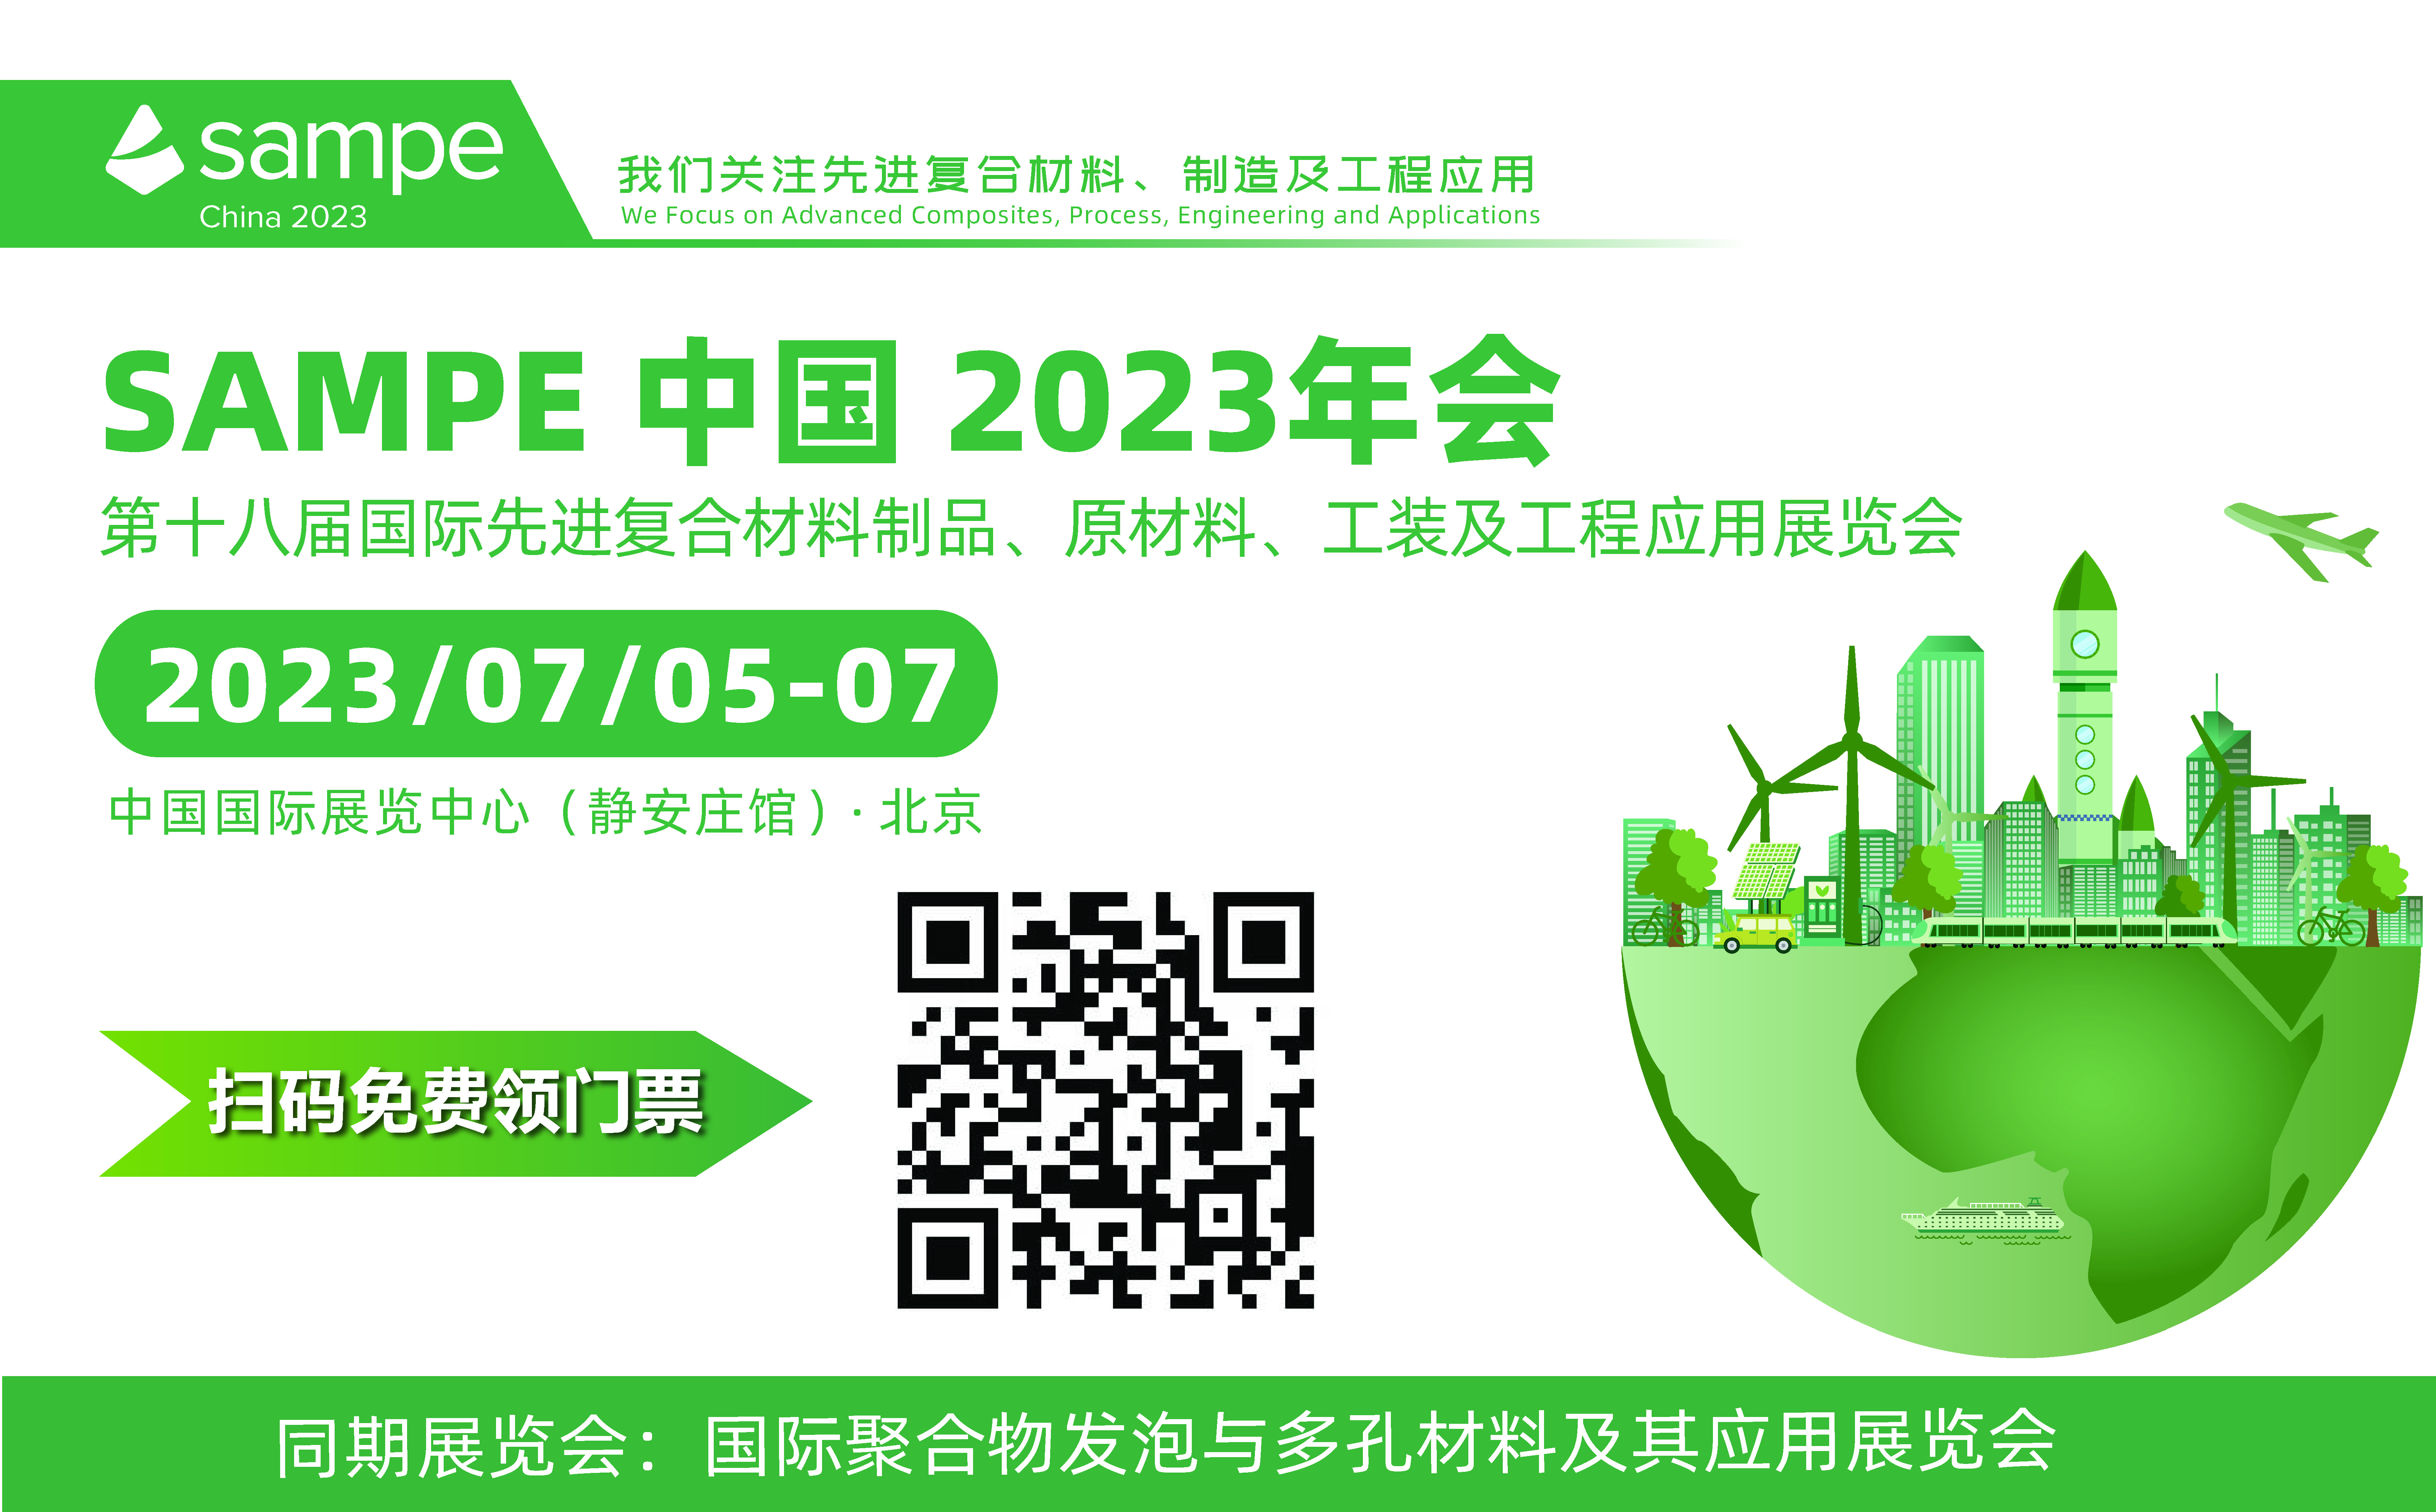 SAPME中國2023年會 第十八屆國際先進符合材料制品、原材料、工裝及工程應用展覽會